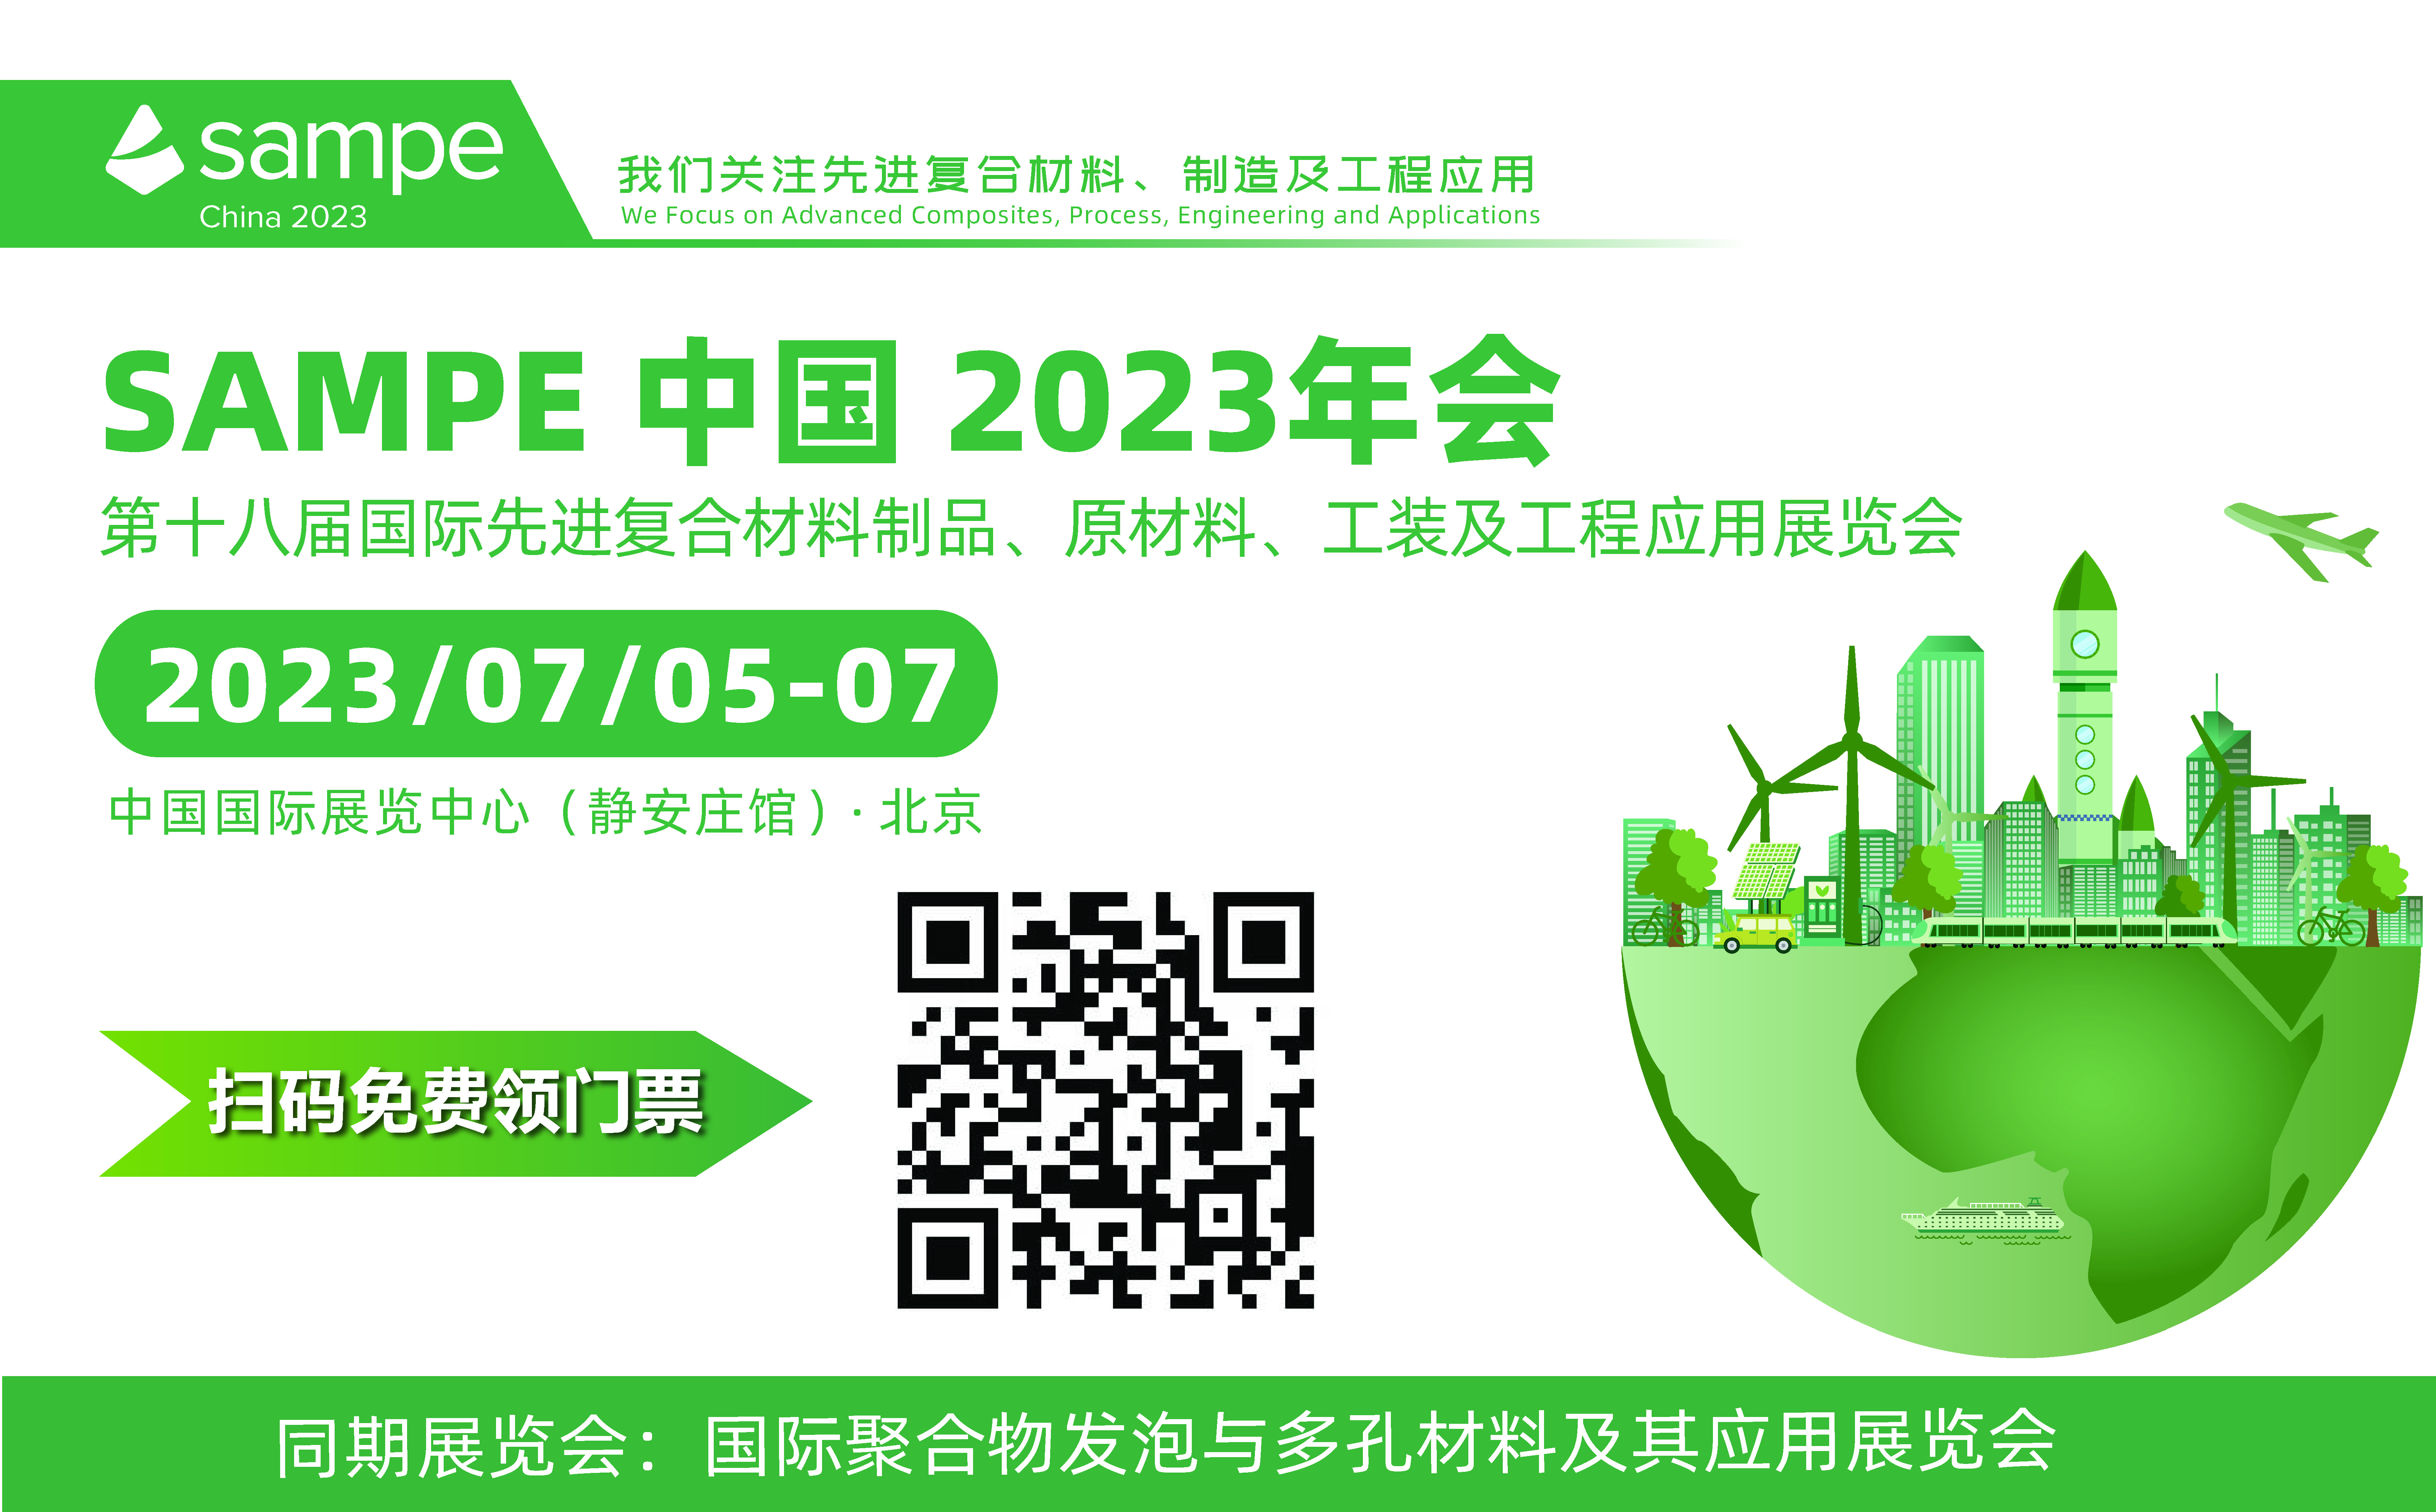 SAPME中國2023年會 第十八屆國際先進符合材料制品、原材料、工裝及工程應用展覽會